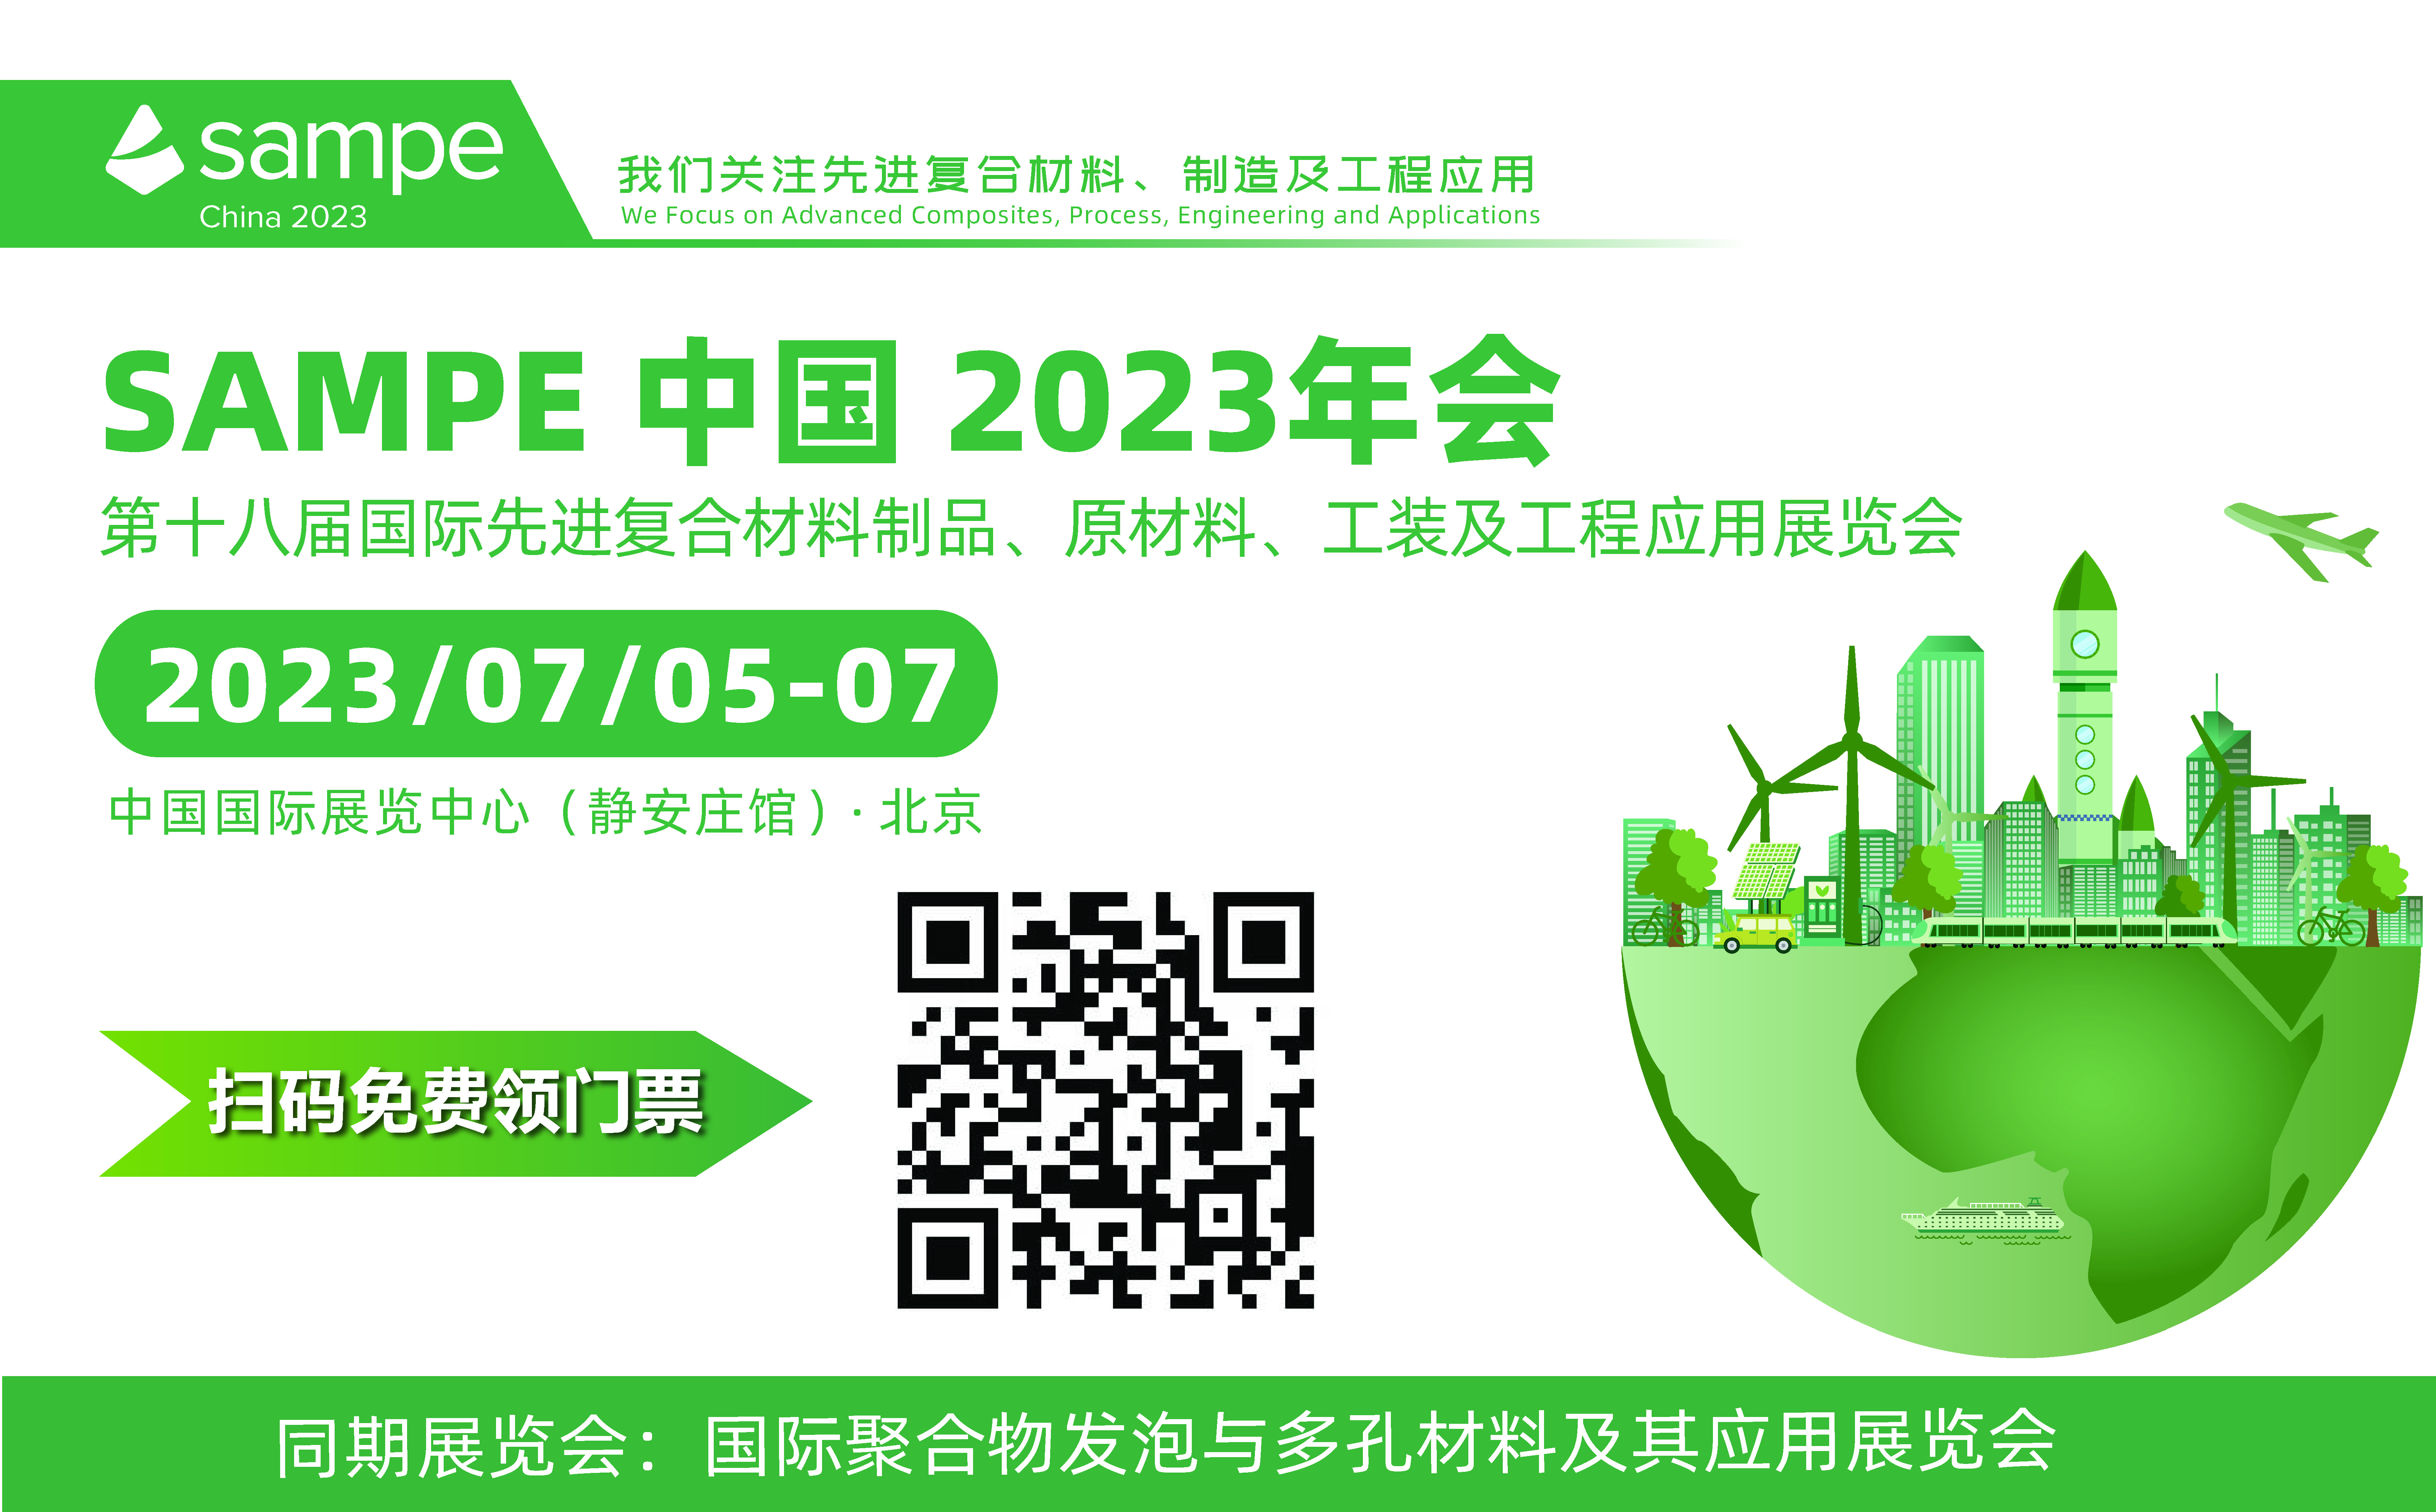 SAPME中國2023年會 第十八屆國際先進符合材料制品、原材料、工裝及工程應用展覽會